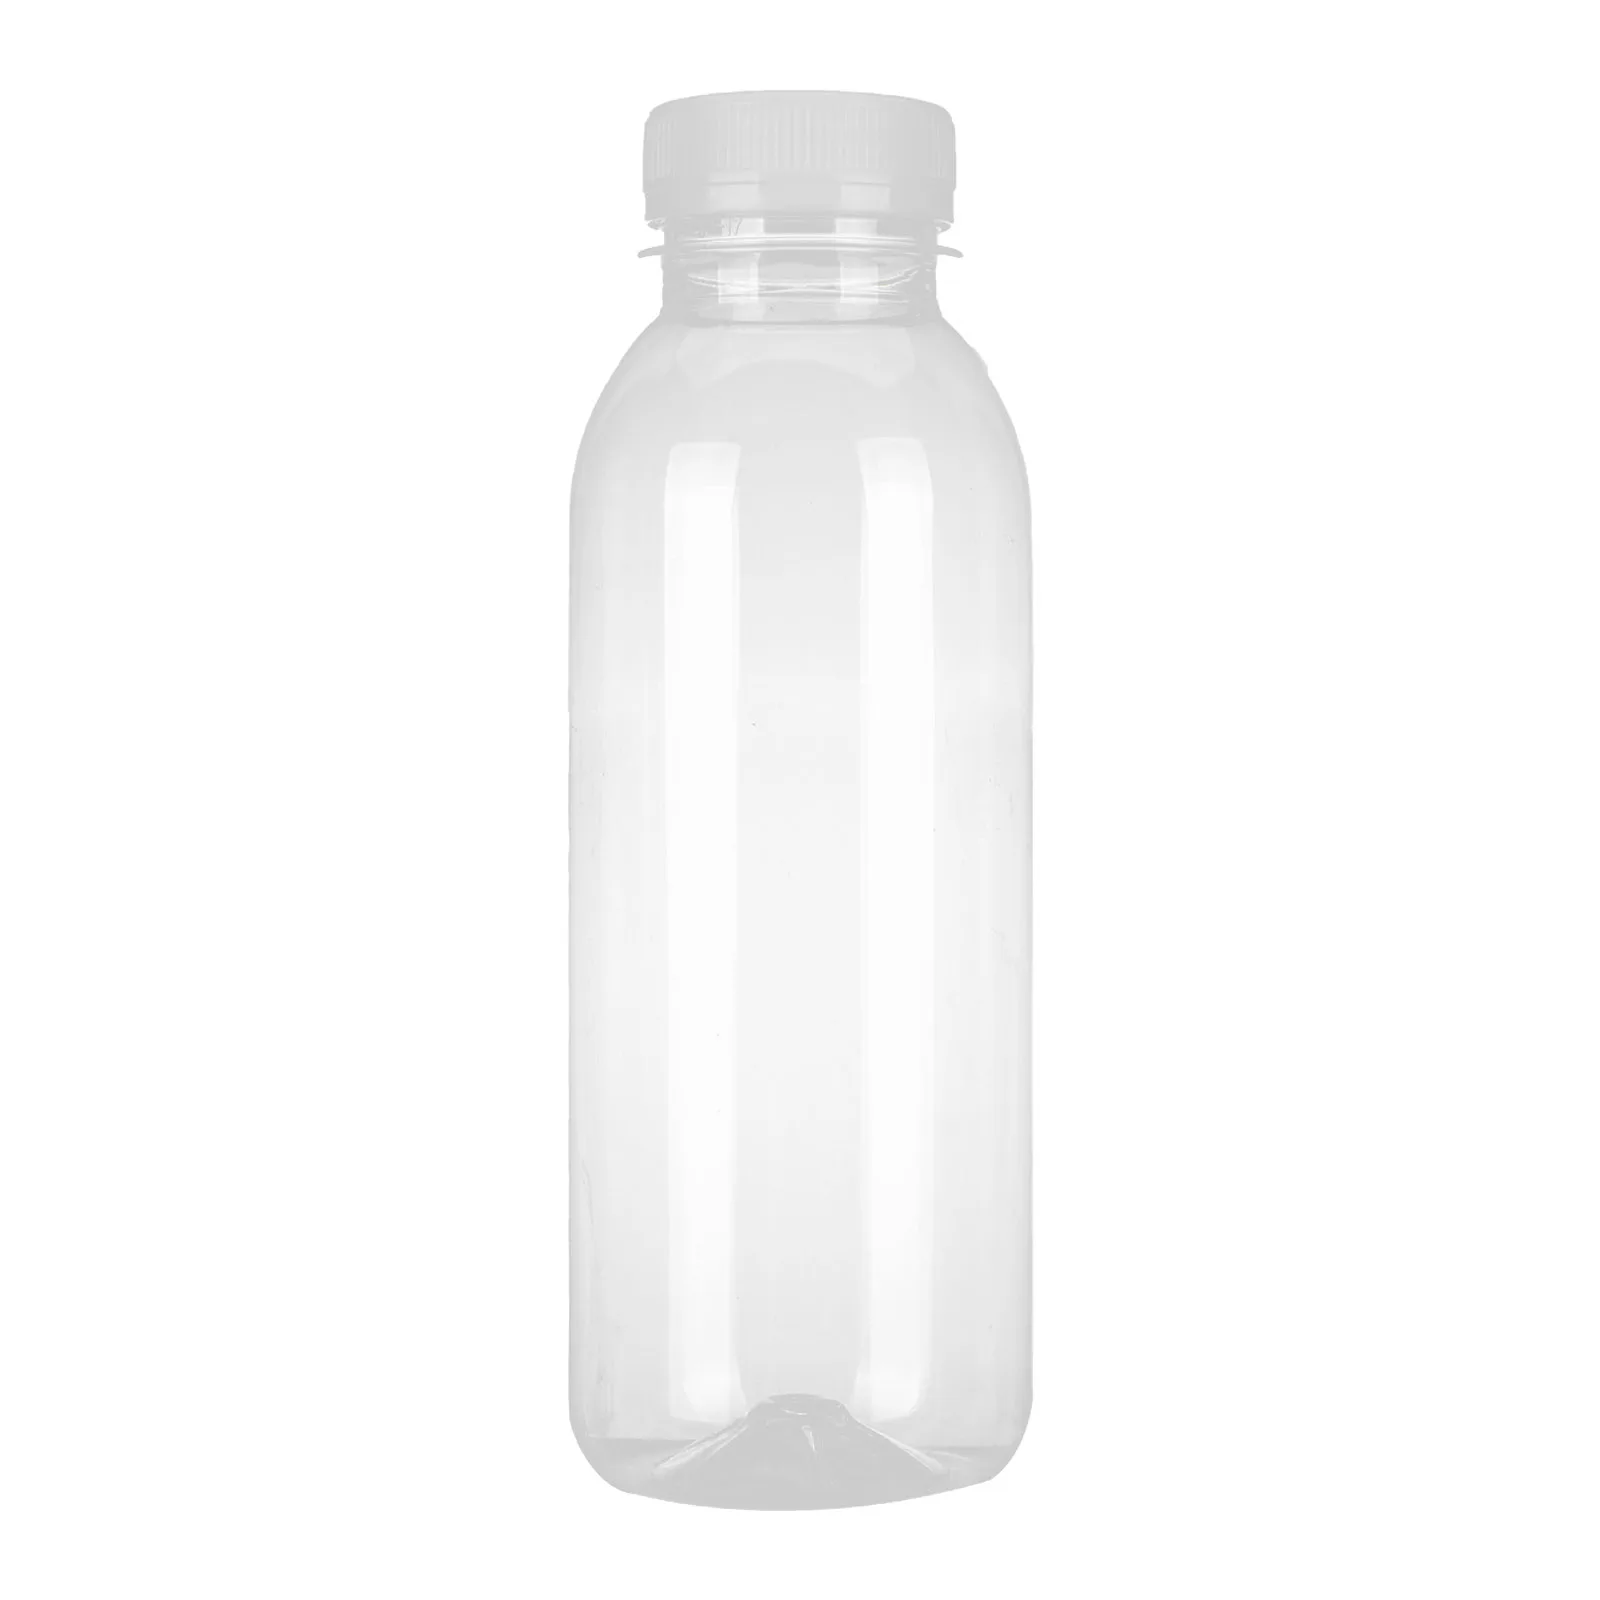 Hemoton Plastic Milk Bottle Clear Container Clear Container 10pcs Empty  Plastic Bottles Milk Container Bottles Mini Milk Jugs Water with Lids 300ml